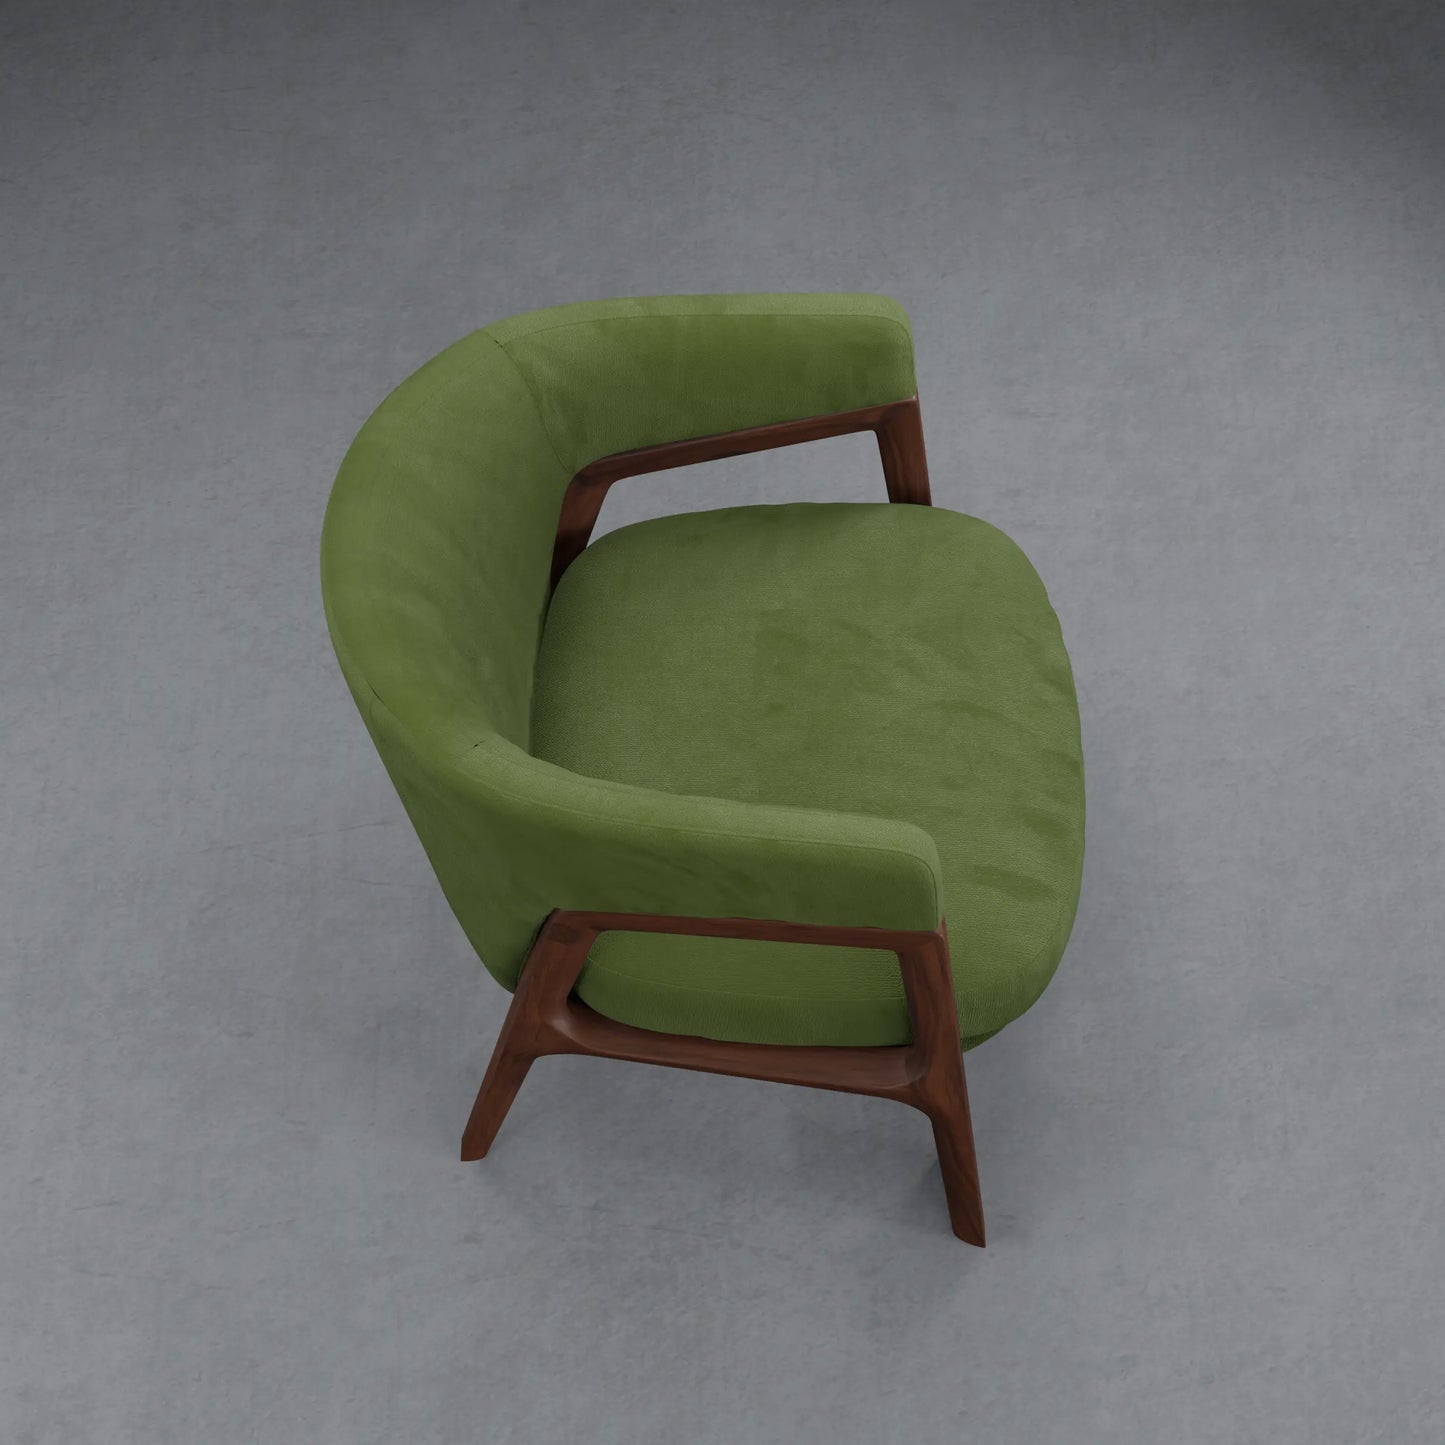 LEMON - Armchair in Teak wood - Linen Finish | Green Color